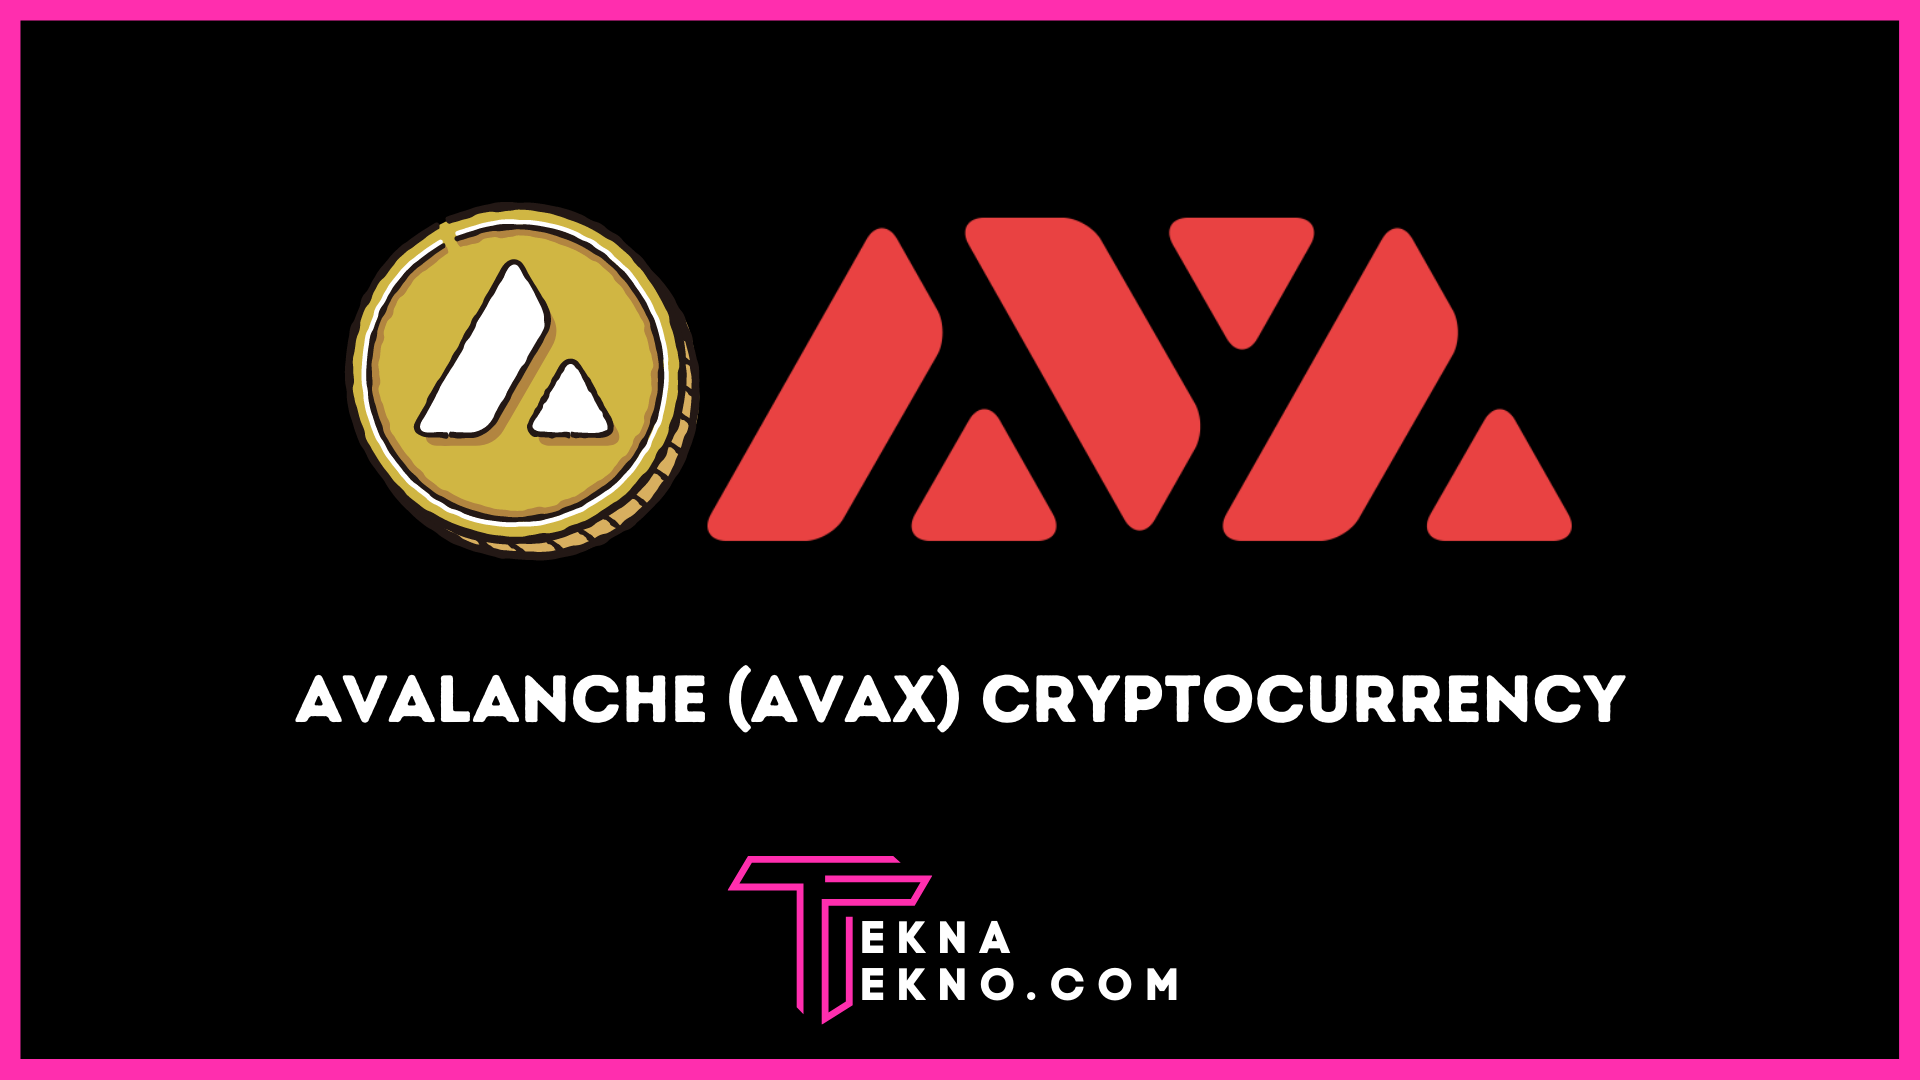 Avalanche (AVAX) Cryptocurrency: Cara Kerja dan Keuntungan